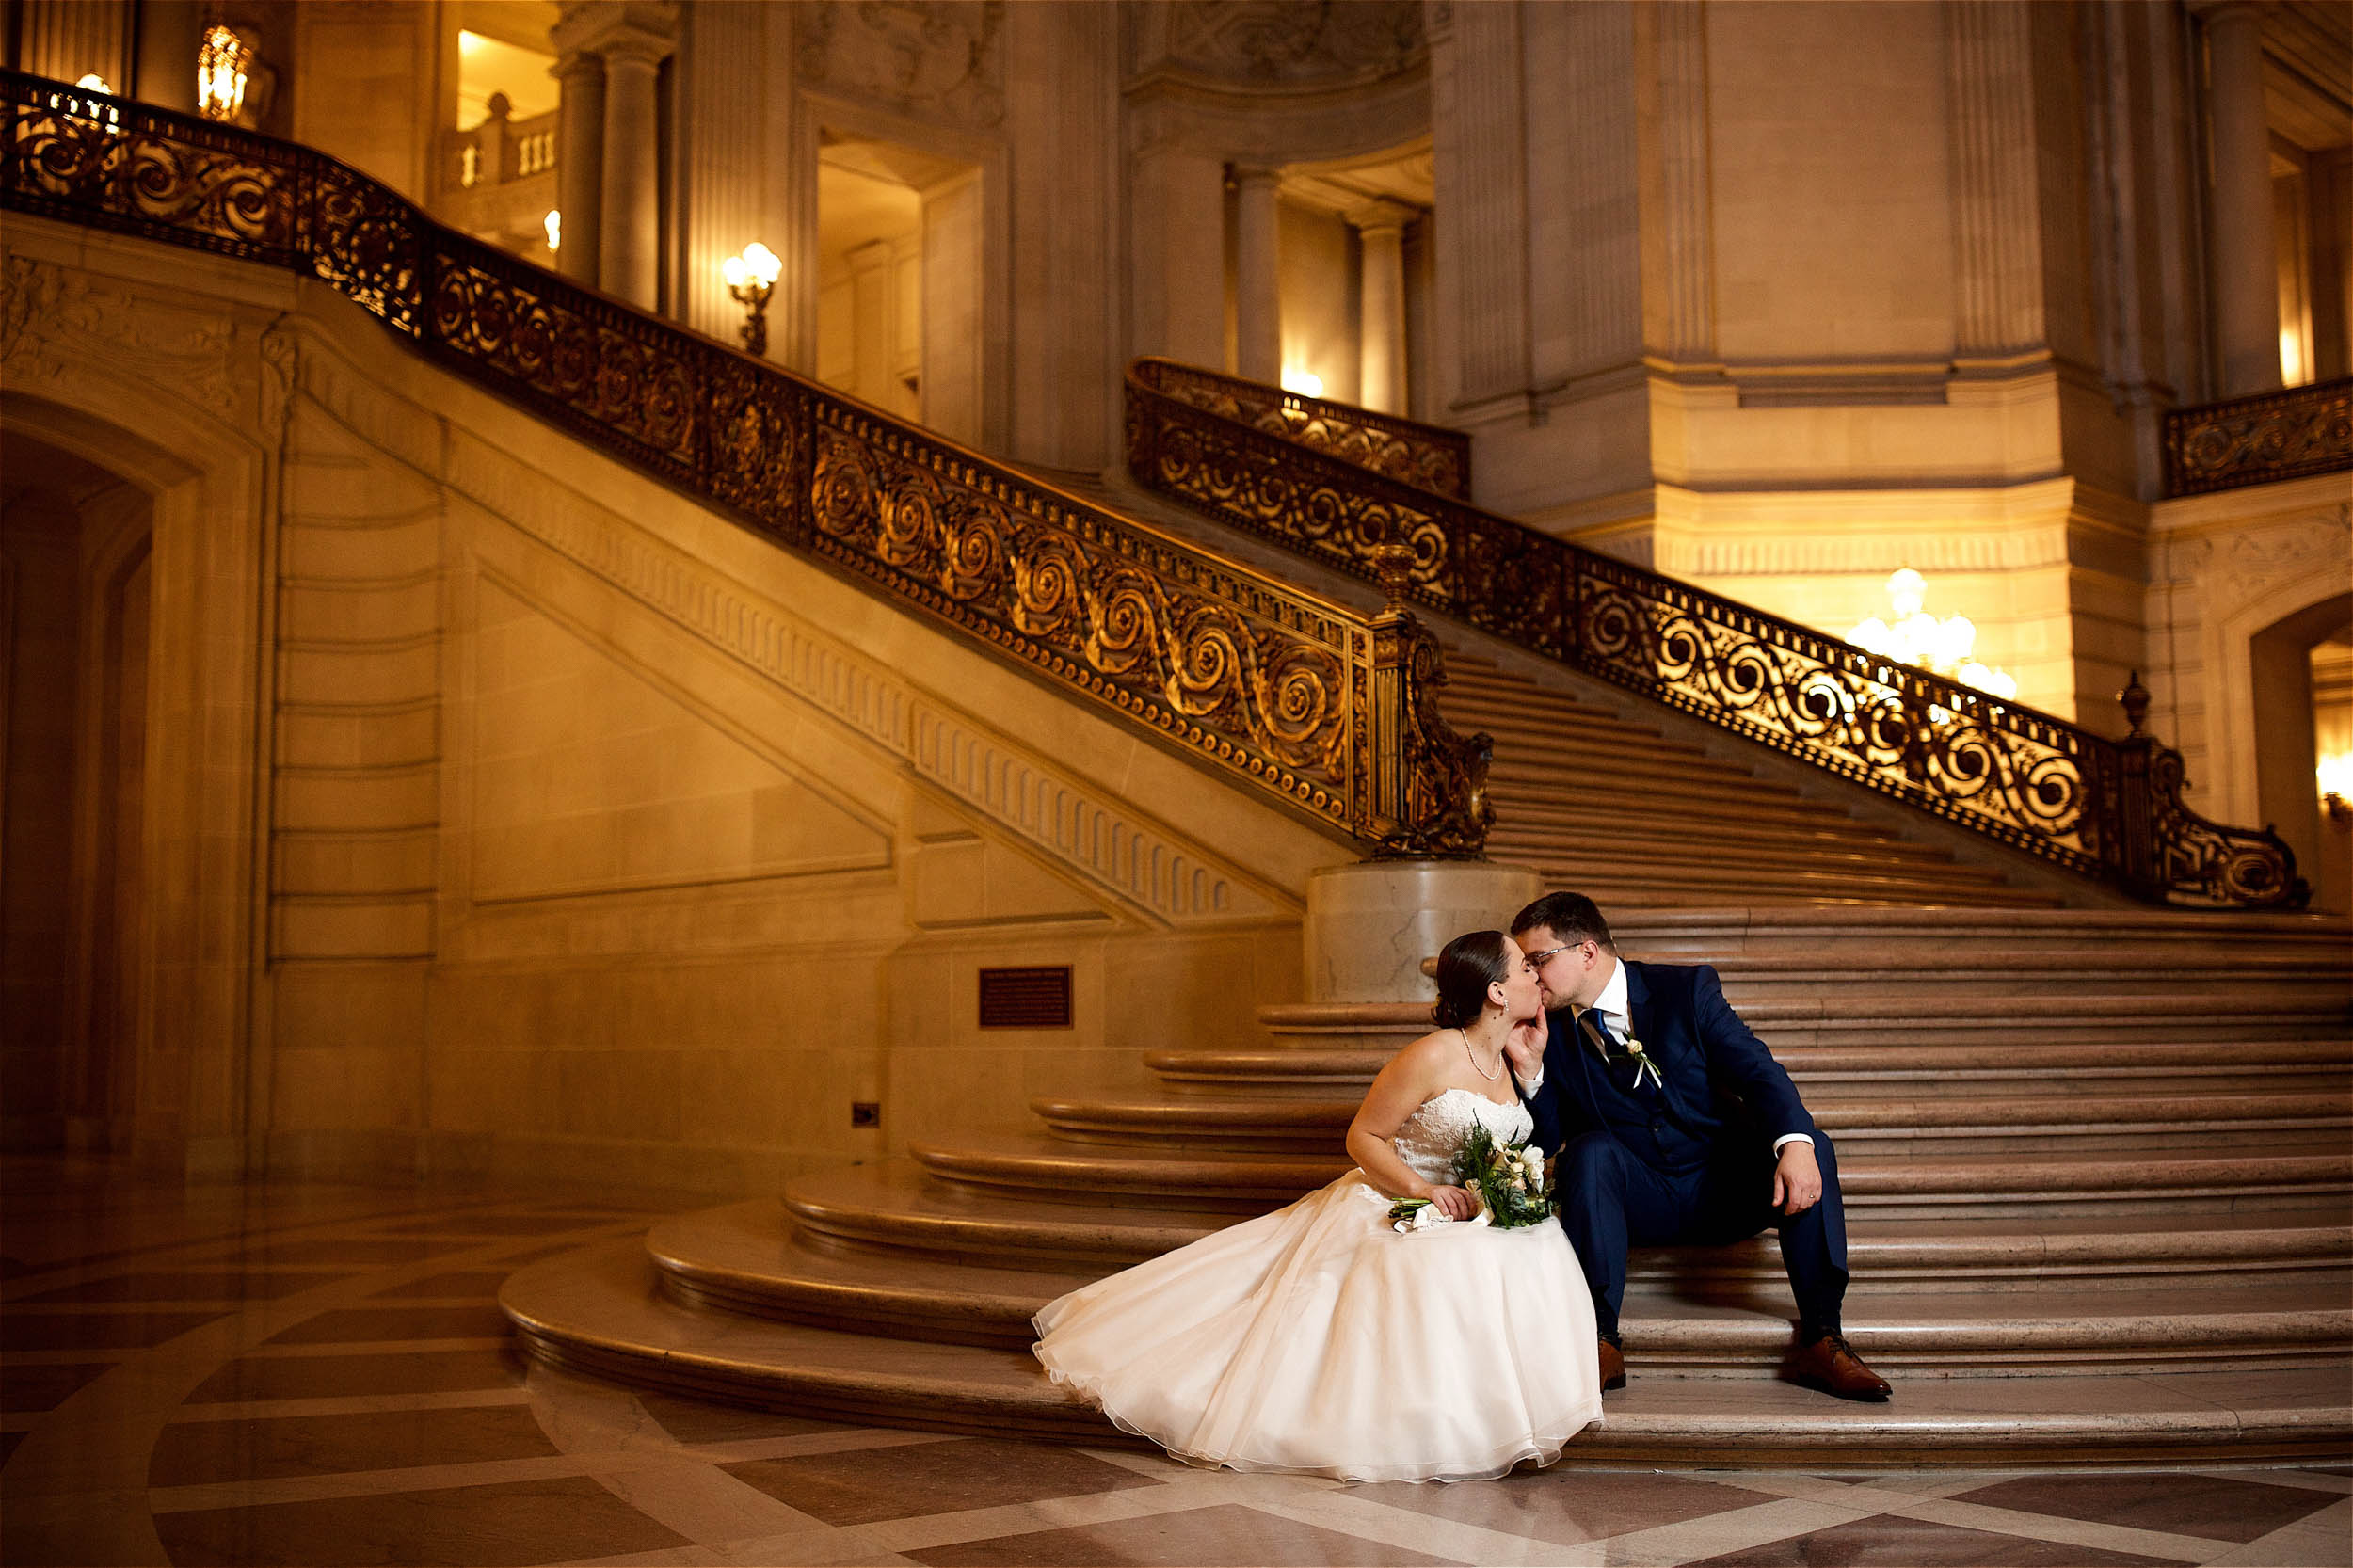 San Francisco City Hall staircase wedding photo 